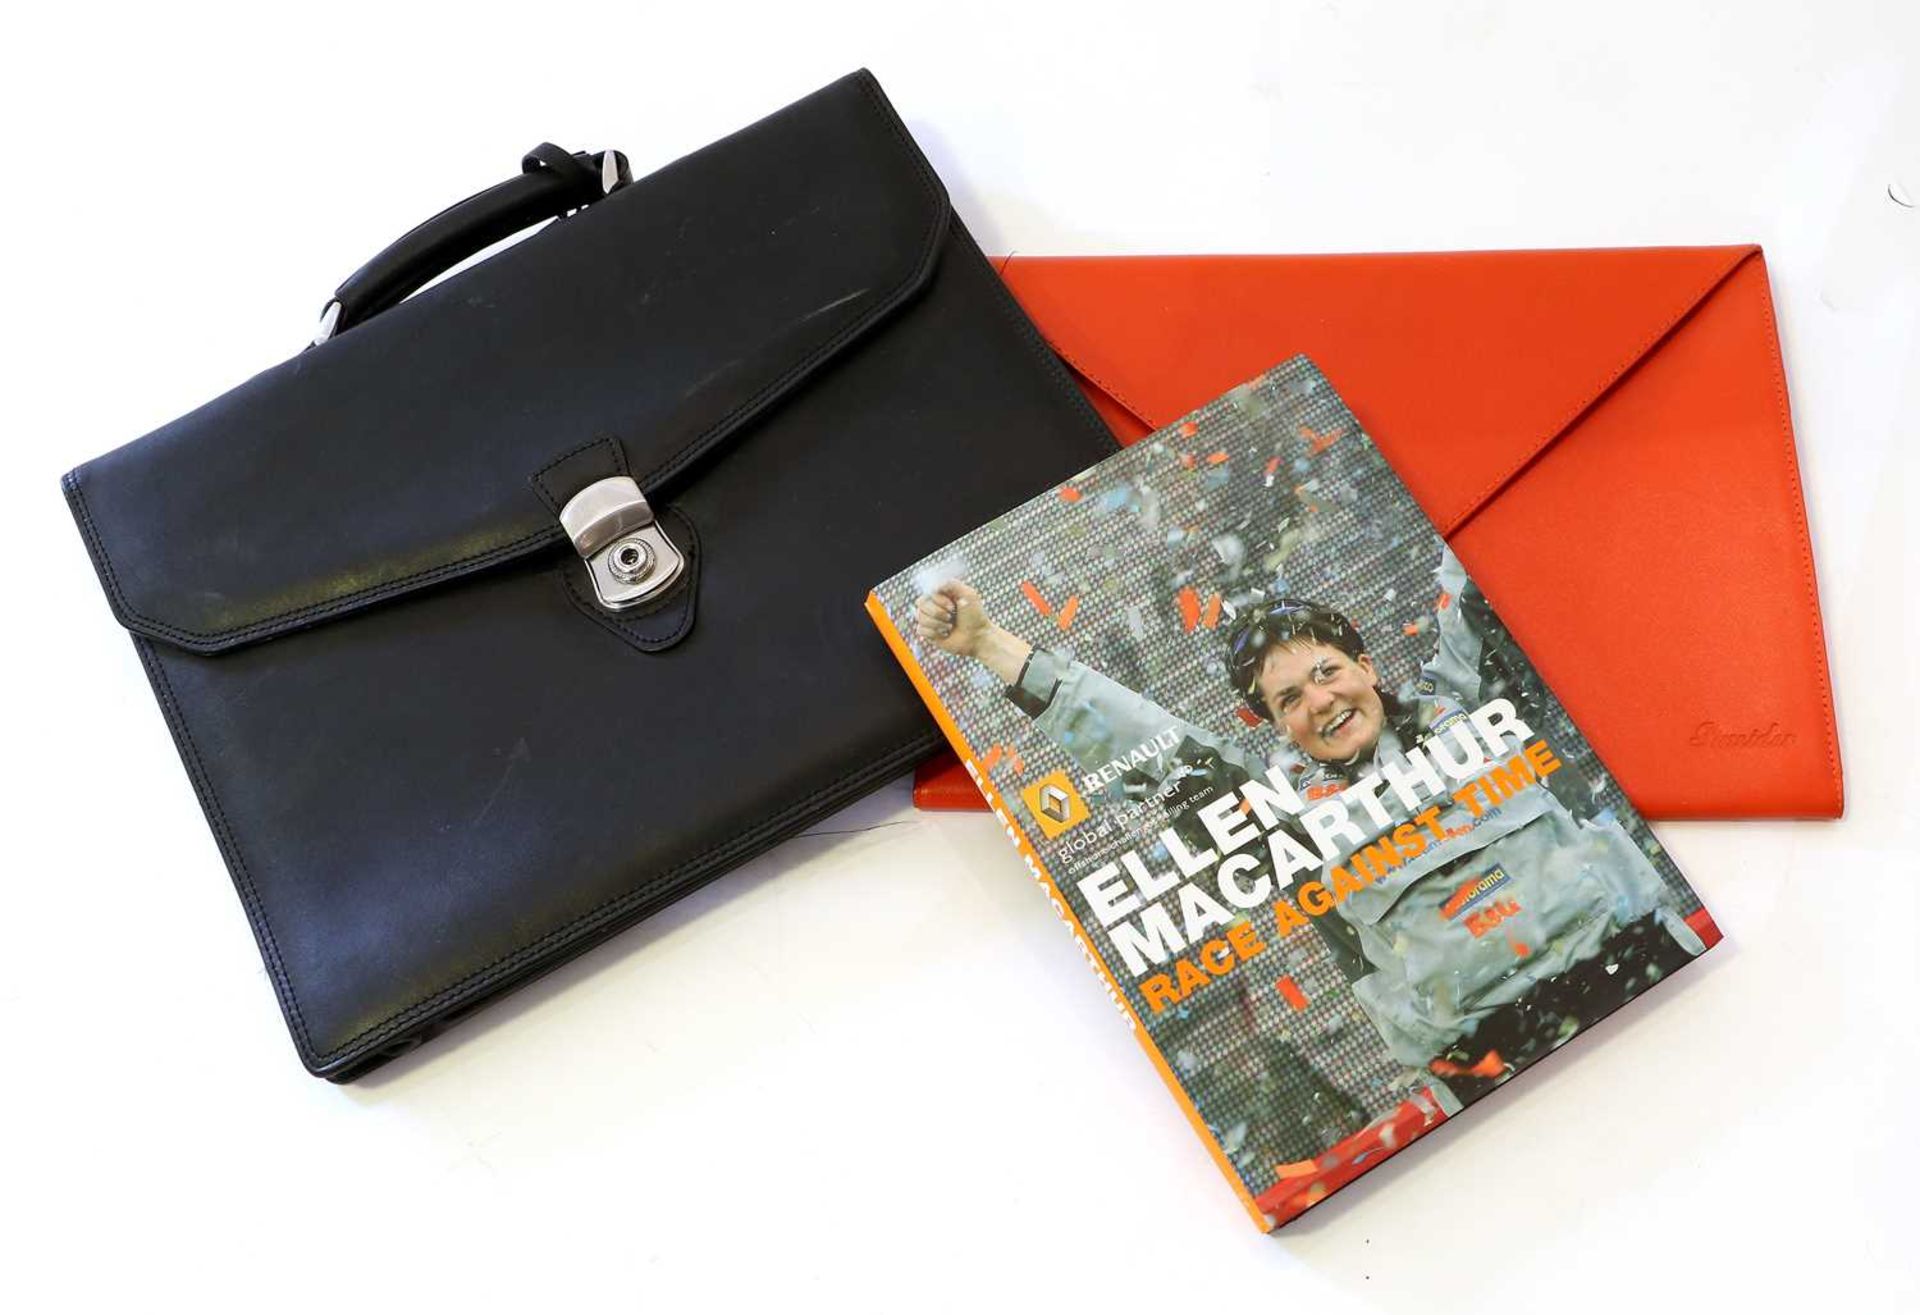 A Jaguar Black Leather Briefcase, A Fiat Stilo Red Leather Folder by Pineidder and a Signed Hardback